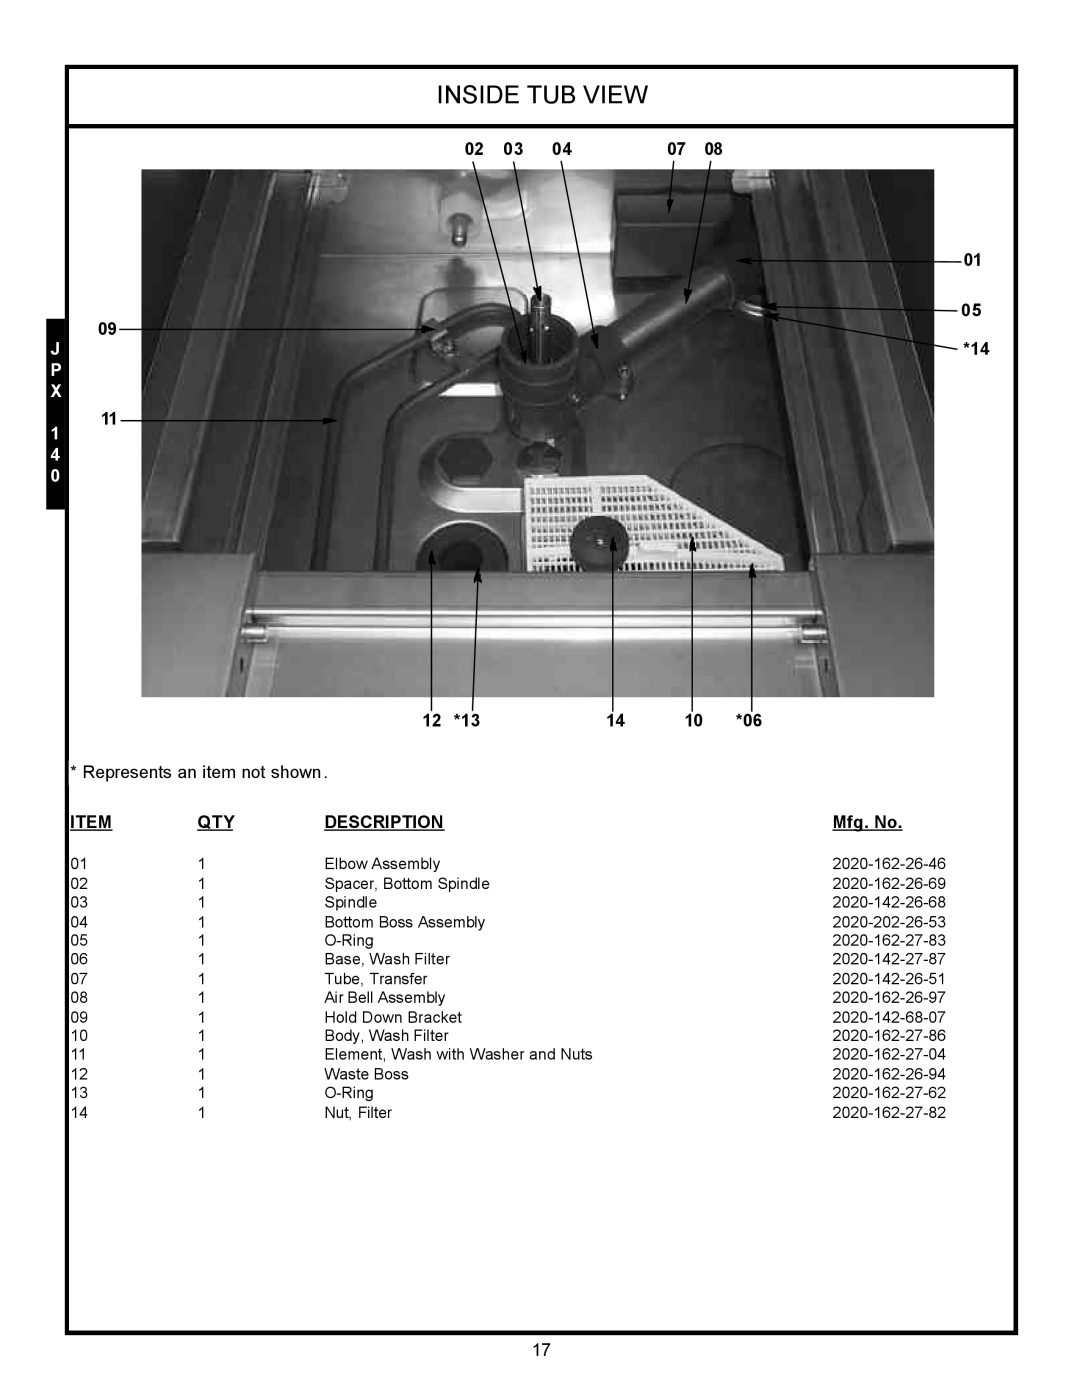 Jackson jpx-140, JPX-200, JPX-160 service manual Inside Tub View, Represents an item not shown, Description, Mfg. No 